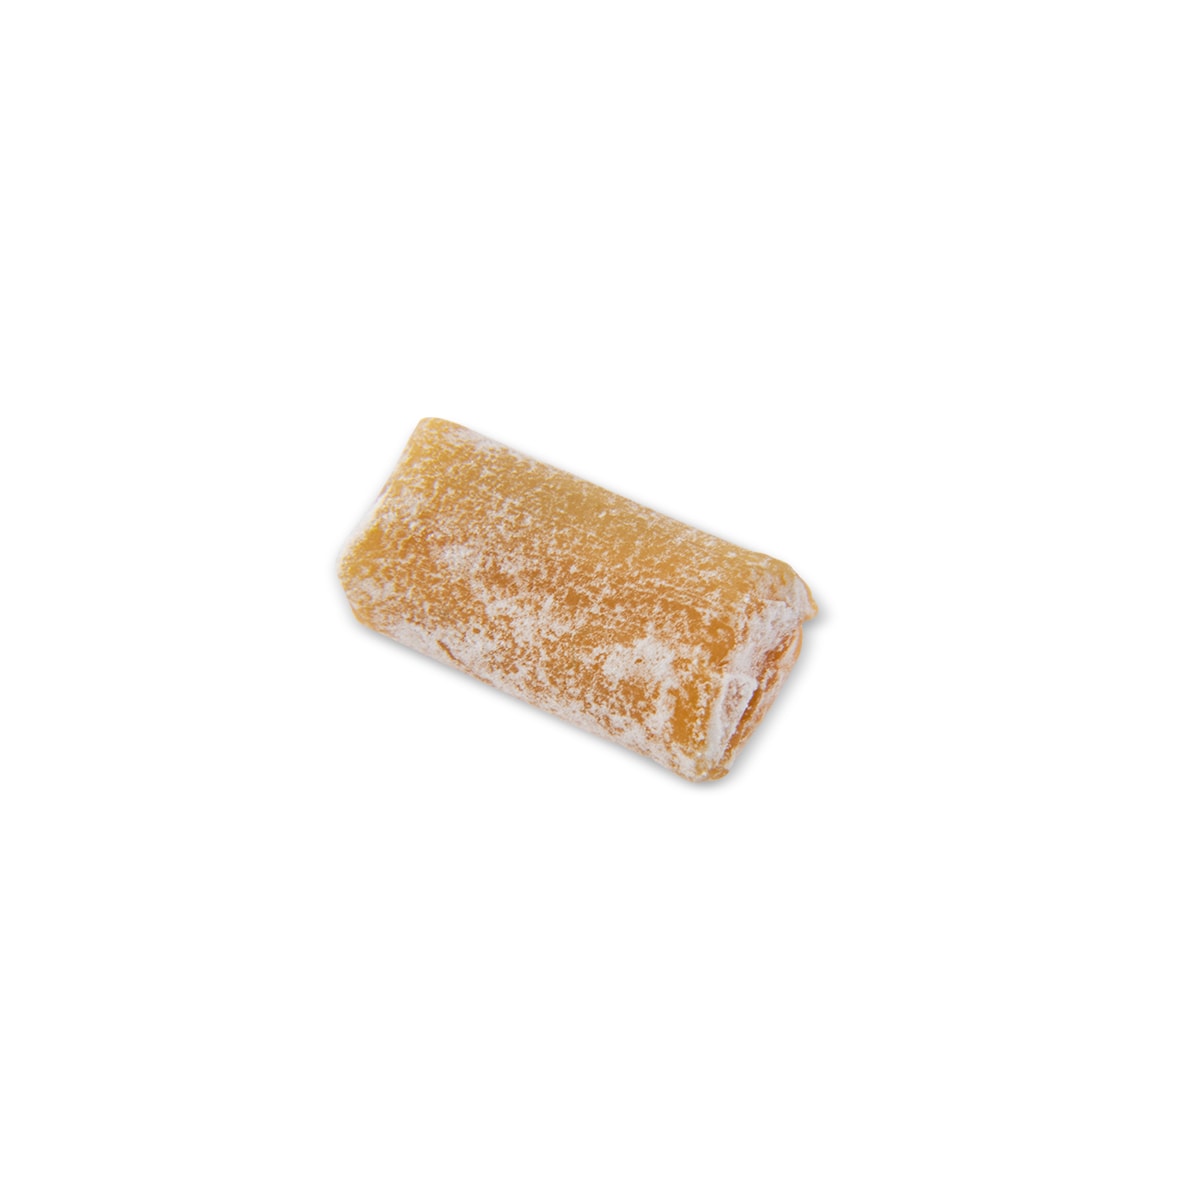 Endoca, CBD Chewing Gum, Peppermint, 10ct, 150mg CBD 4